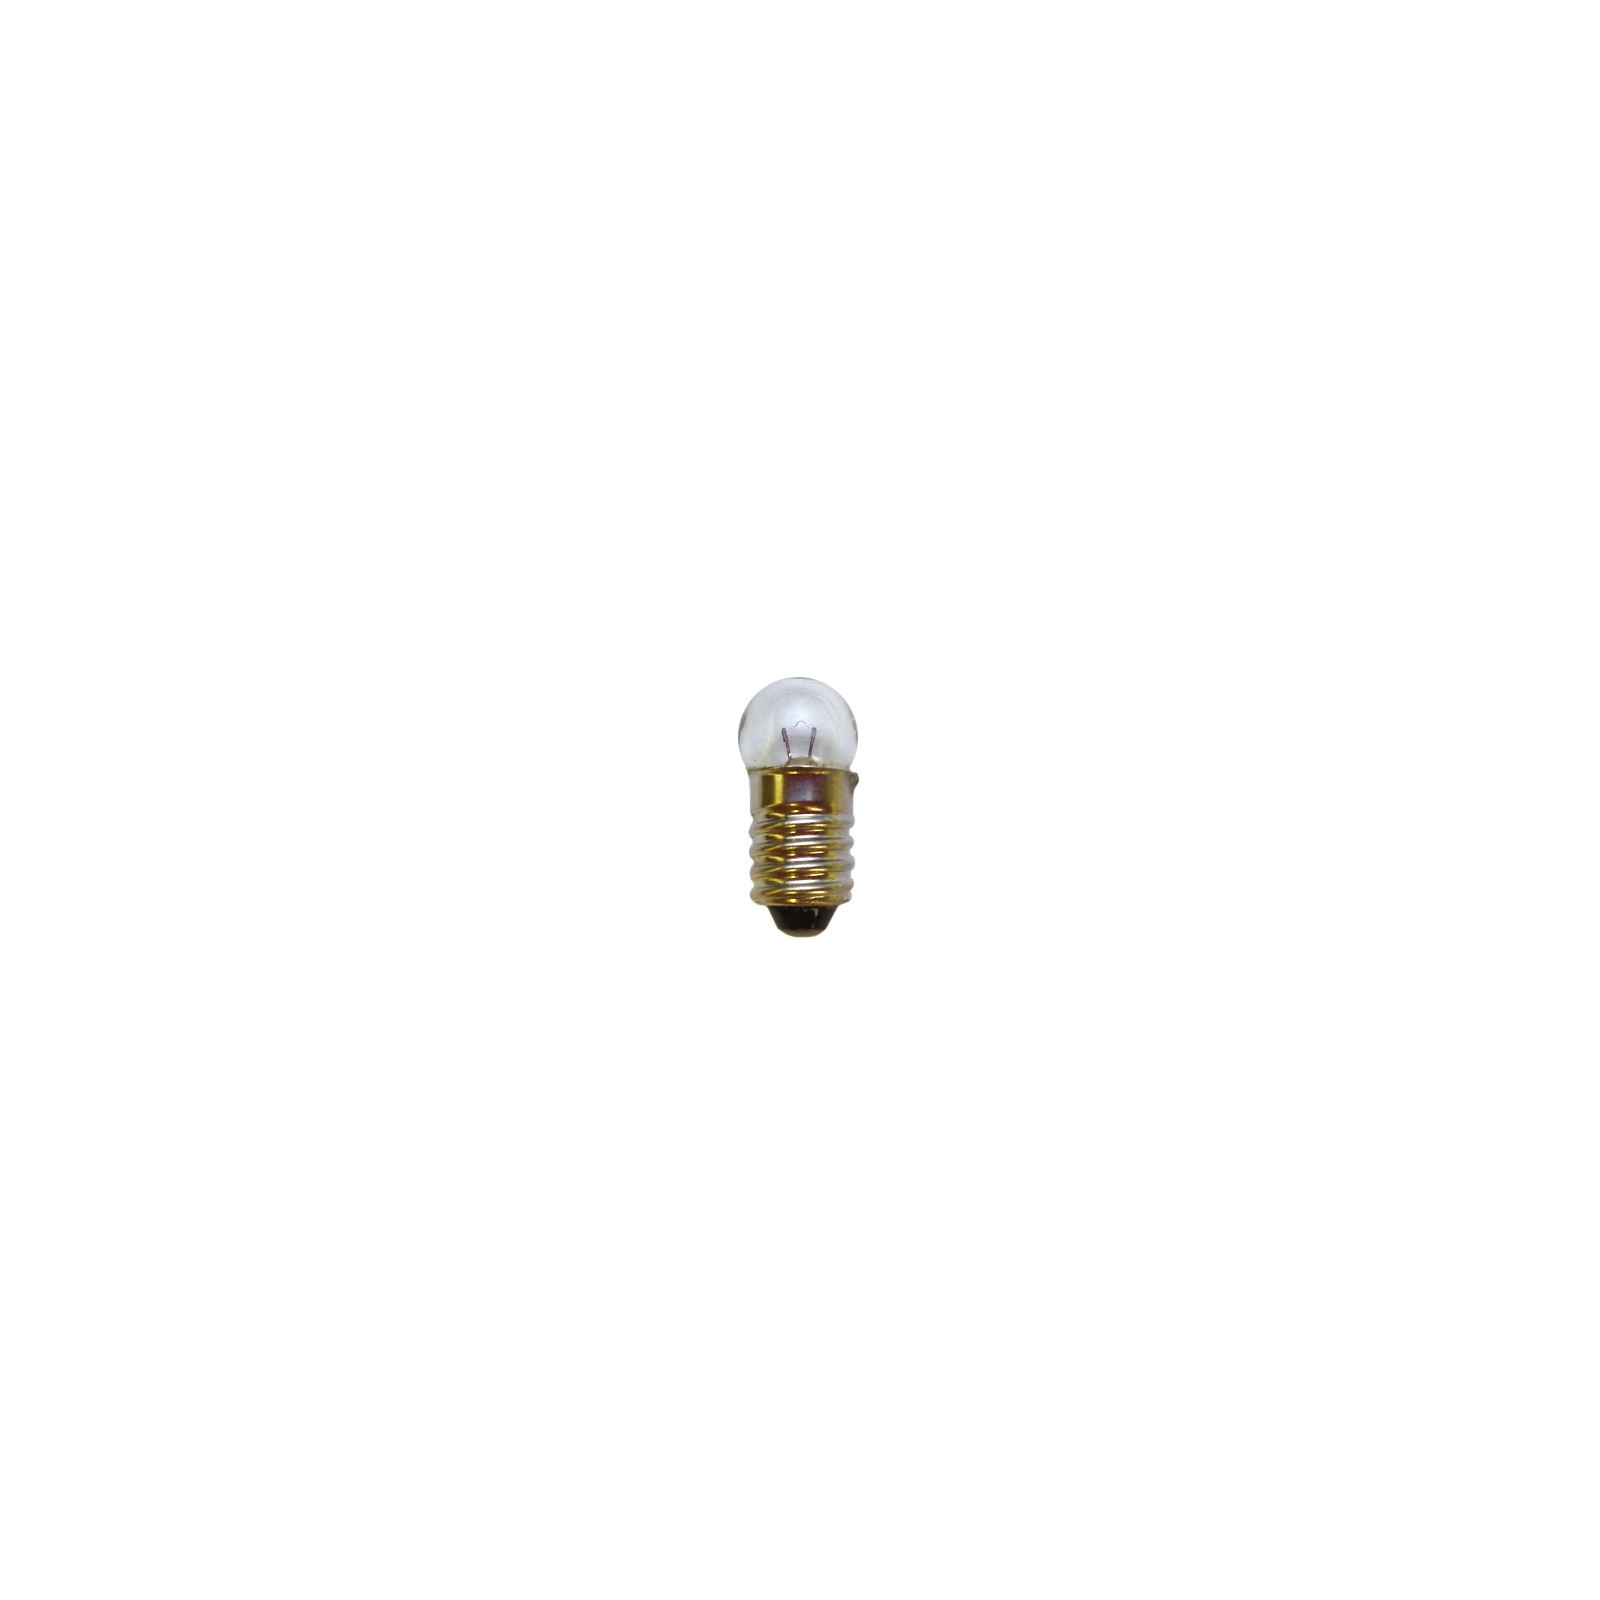 Ampoules culot E10 - 3,5 V / 200 mA (lot de 100) - EFCMD - Au